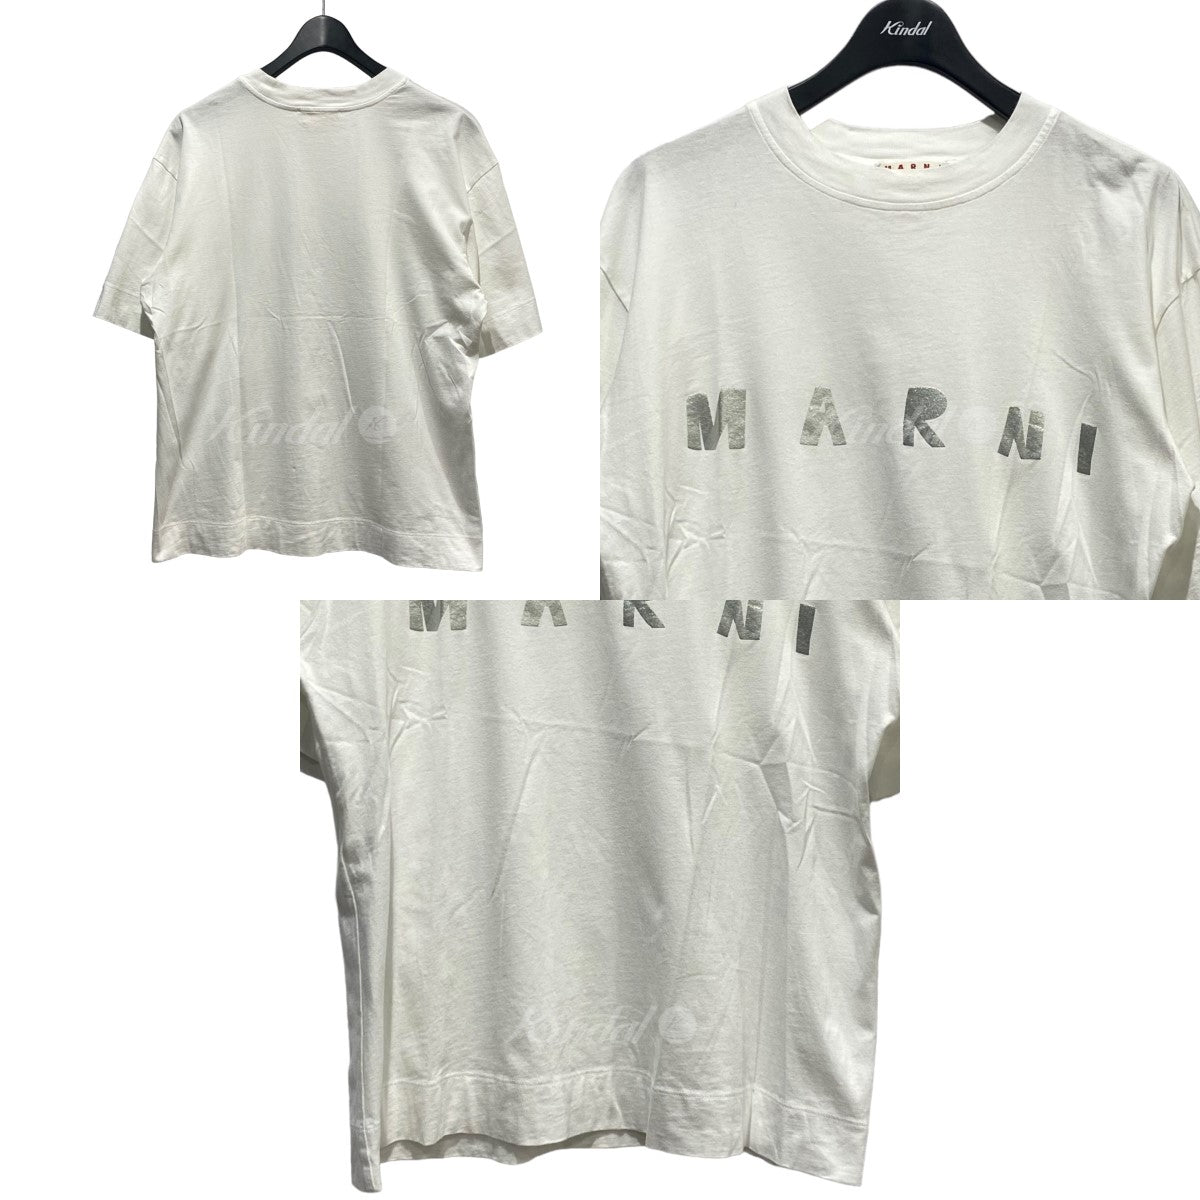 MARNI(マルニ) シルバーロゴプリントTシャツ ホワイト サイズ 12 ...